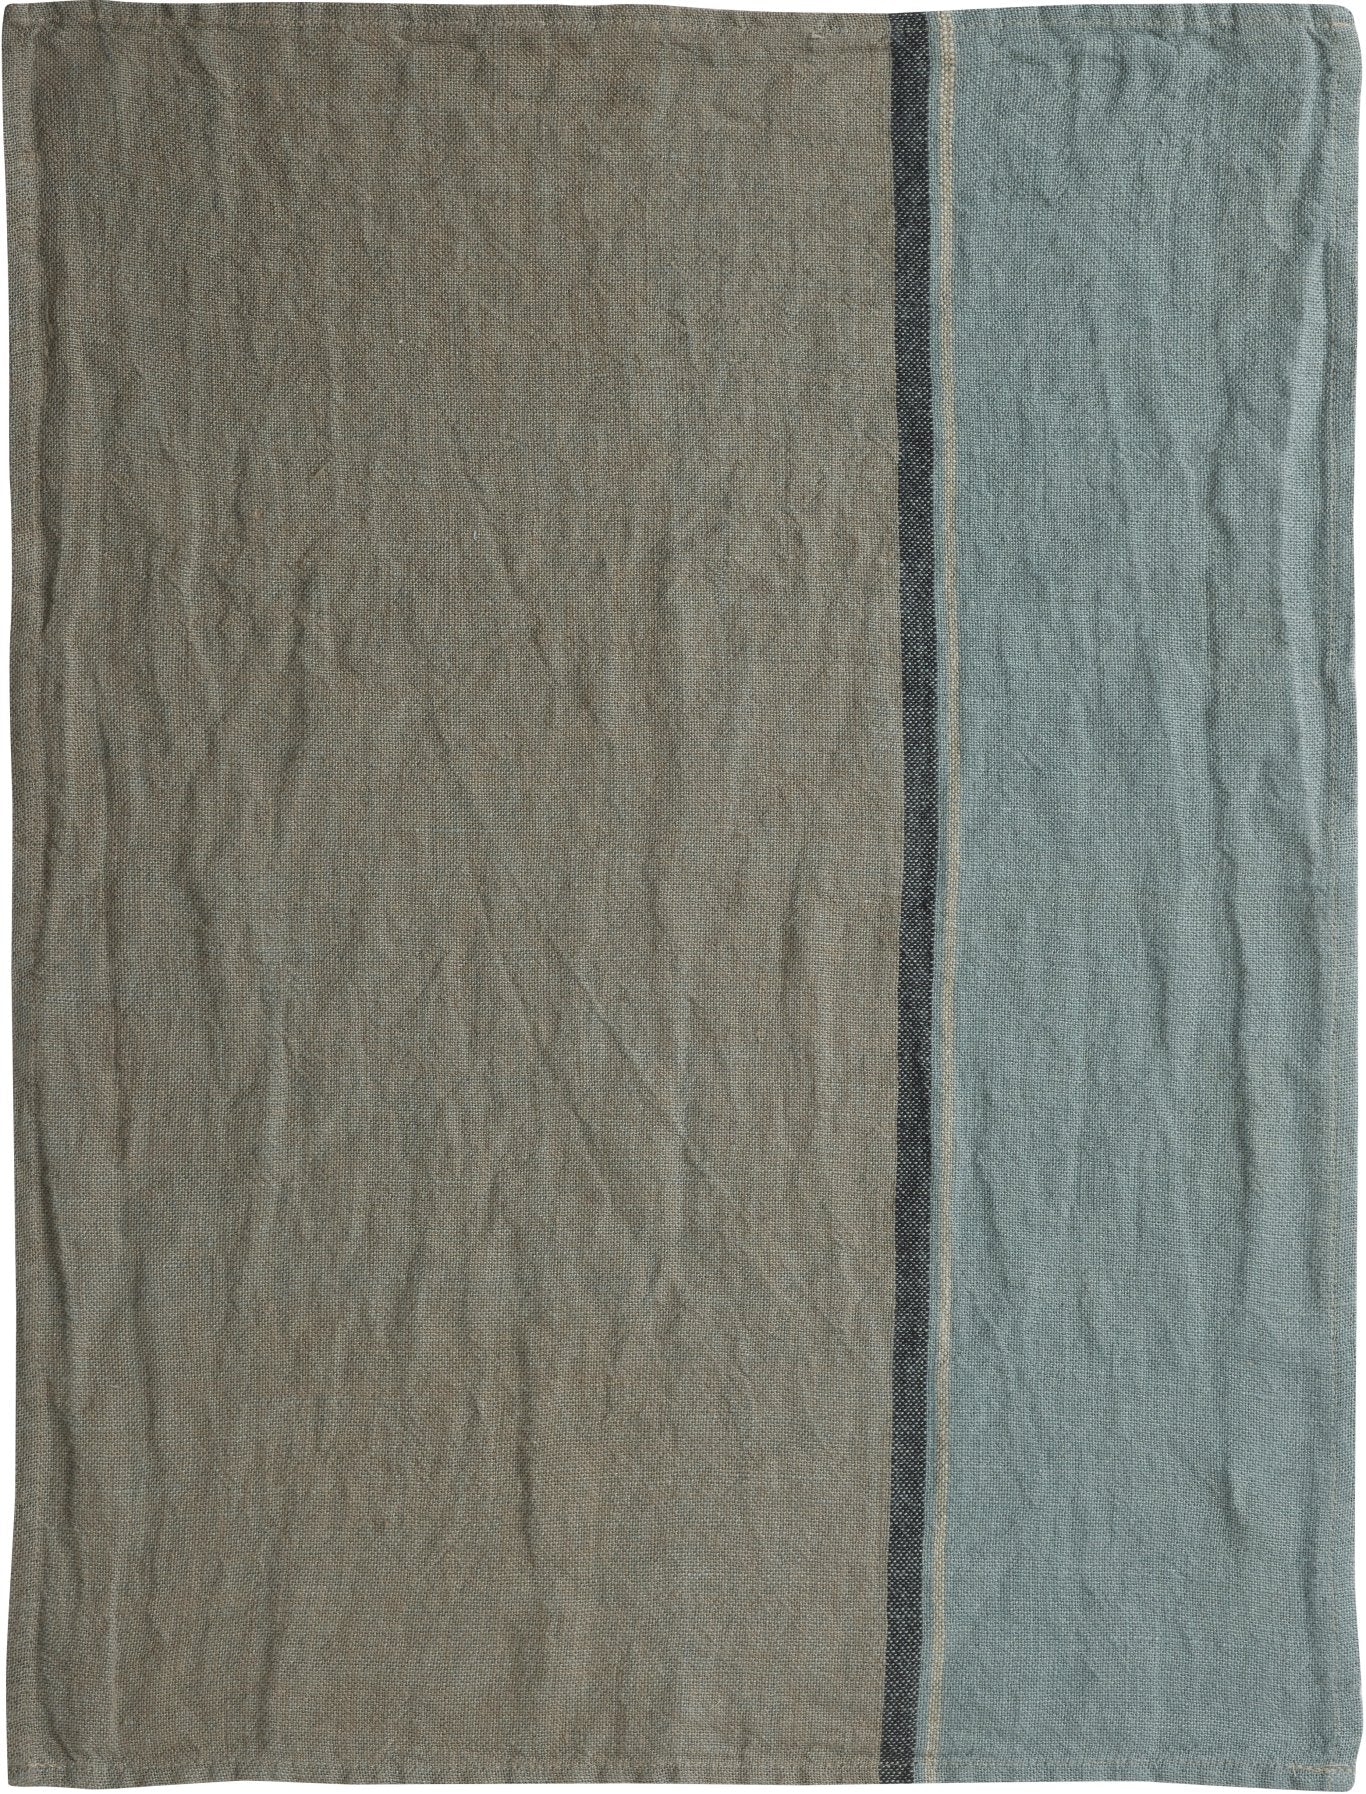 Charvet Editions "Dublin – Vert de Gris", Rustic woven linen tea towel. Made in France.